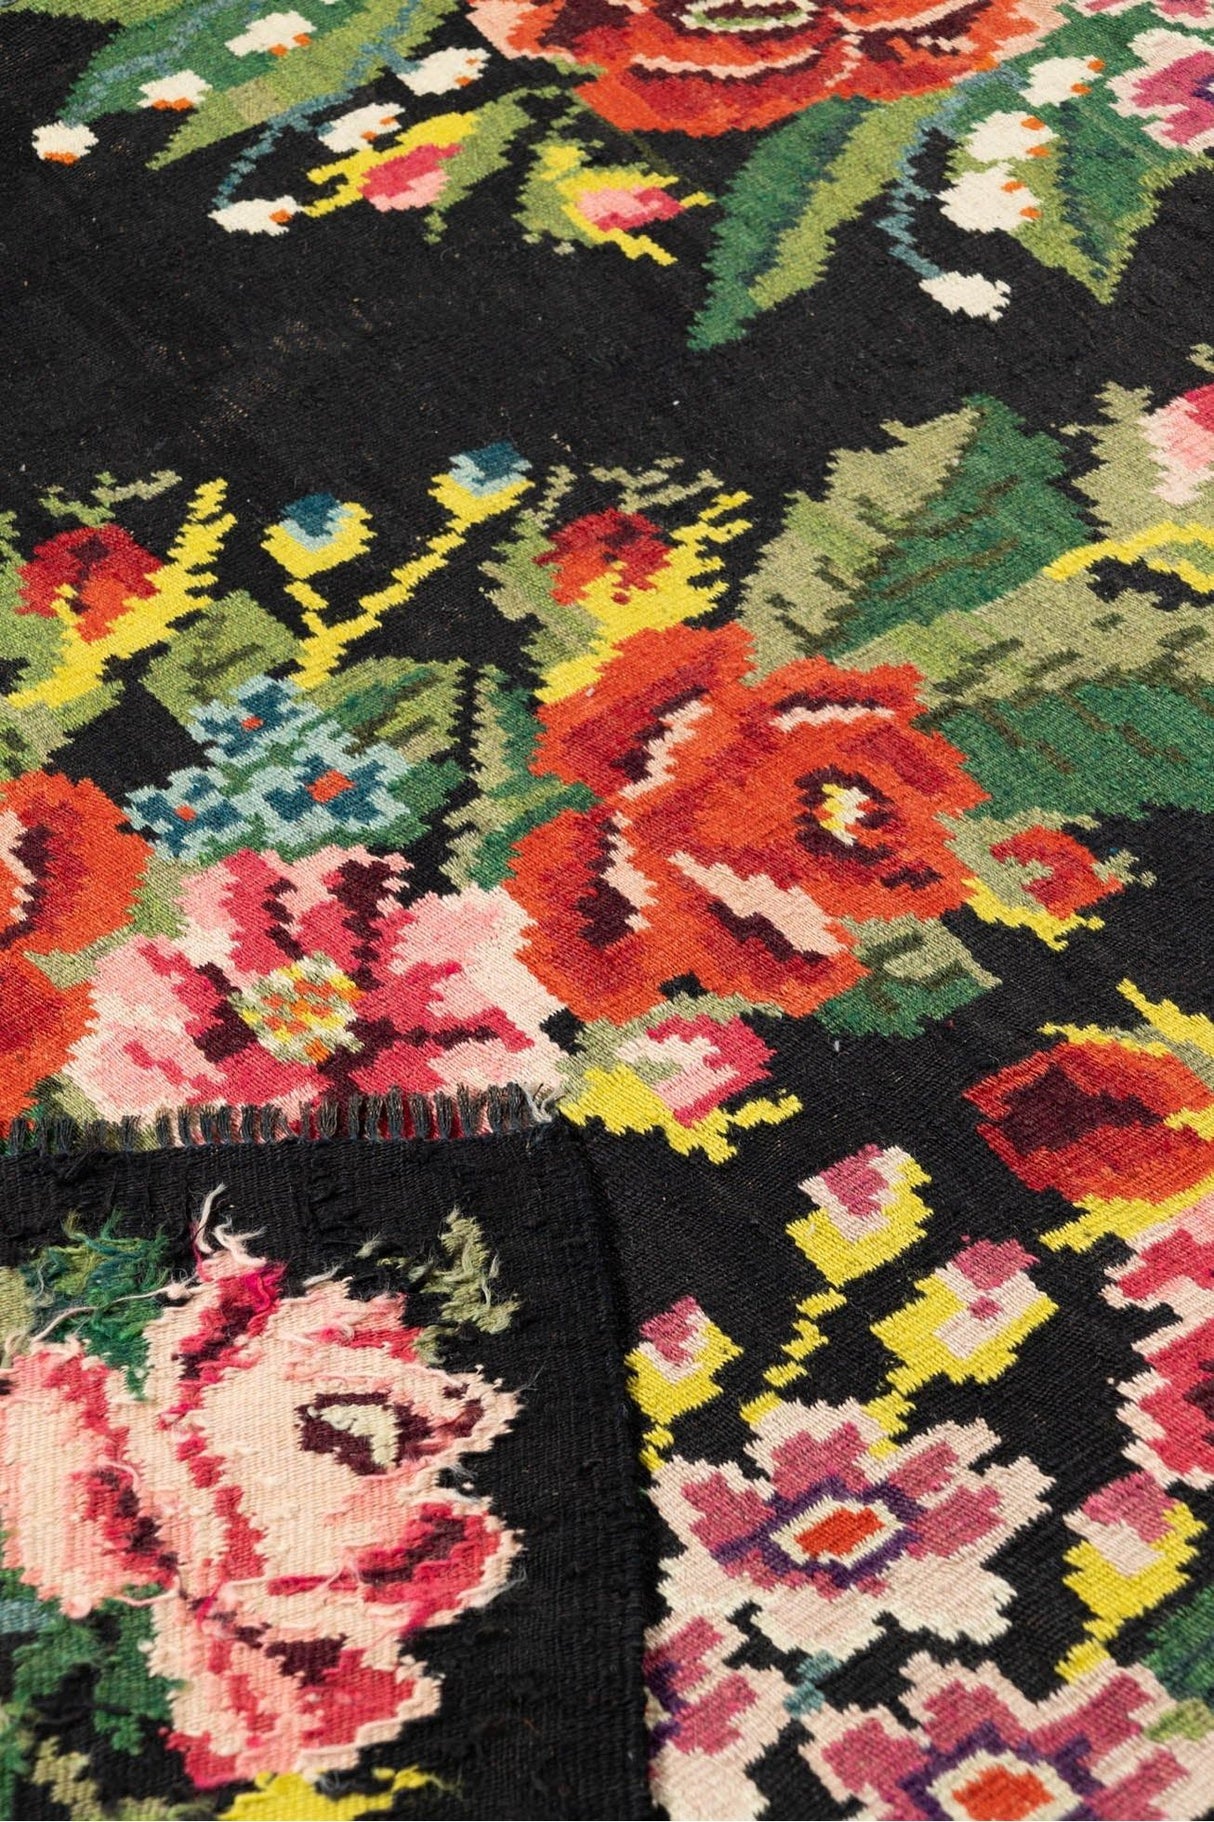 #Turkish_Carpets_Rugs# #Modern_Carpets# #Abrash_Carpets#Qatar8-230X383